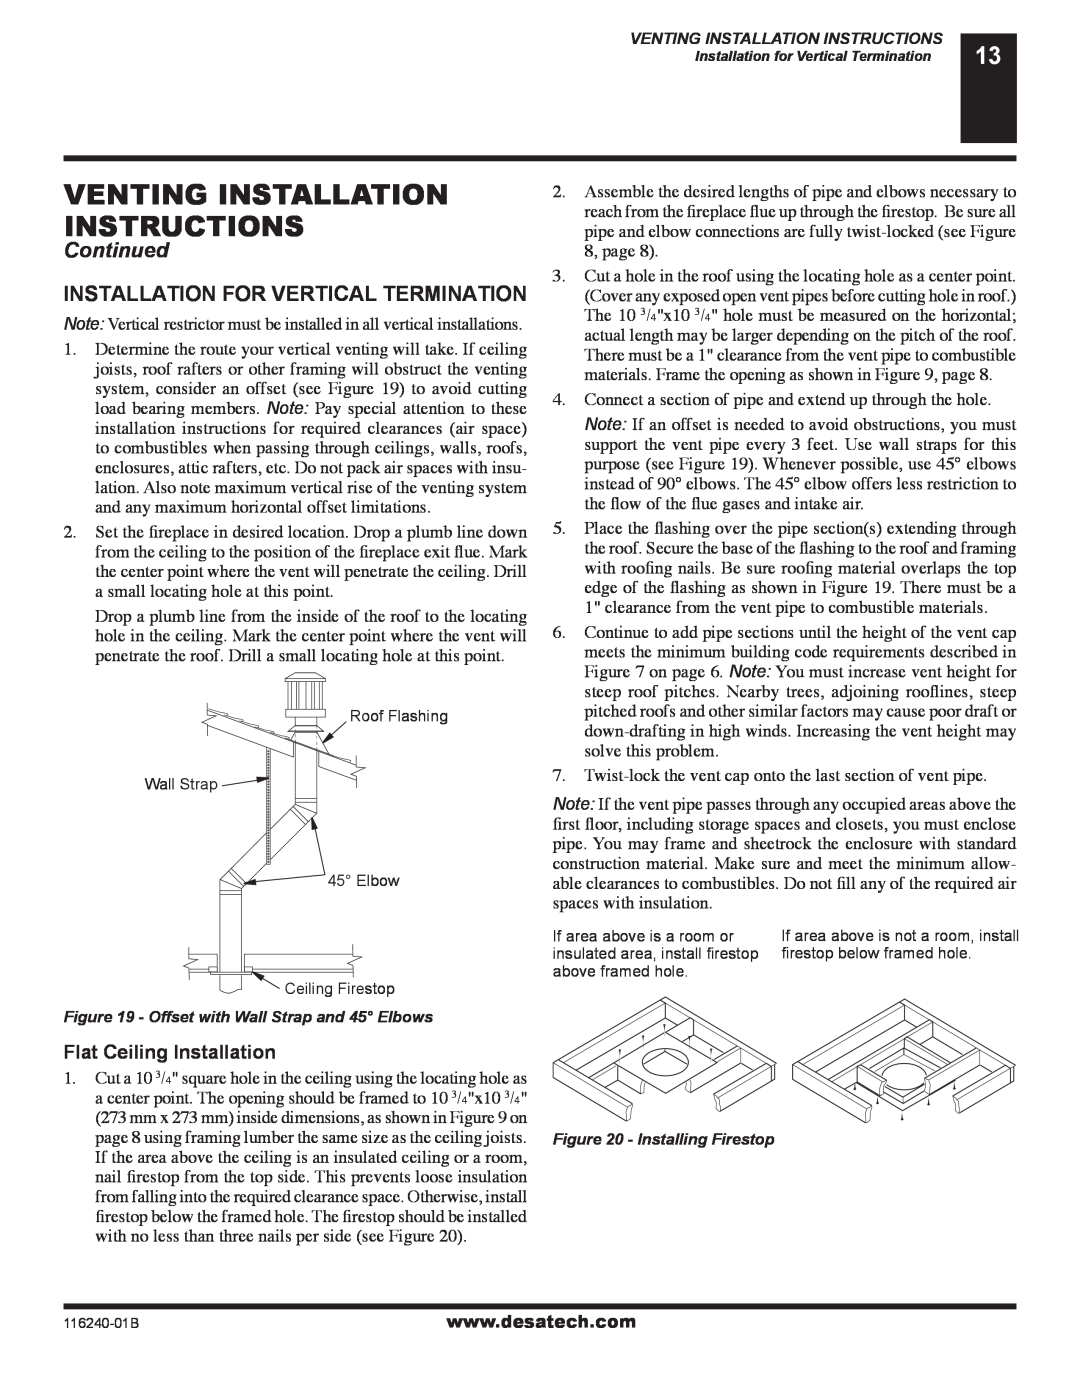 Desa (V)KC42NE SERIE Venting Installation Instructions, Continued, Installation For Vertical Termination 